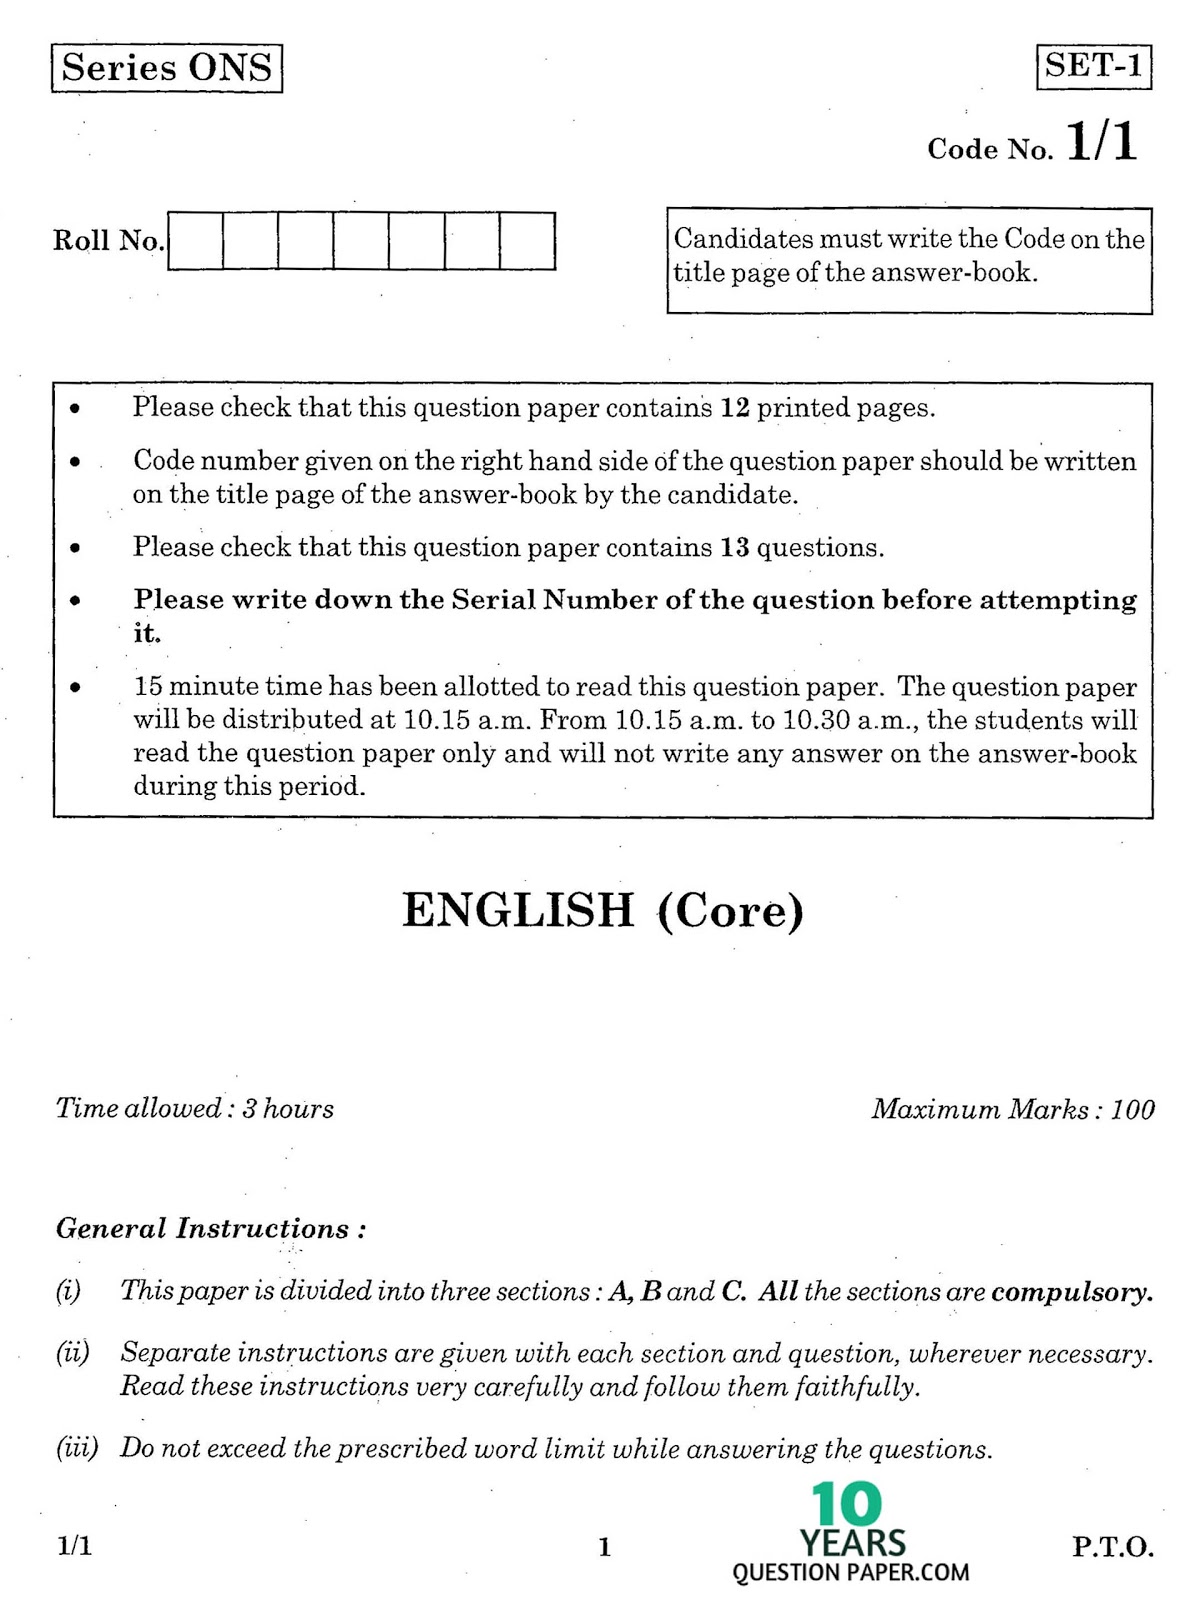 English class essay